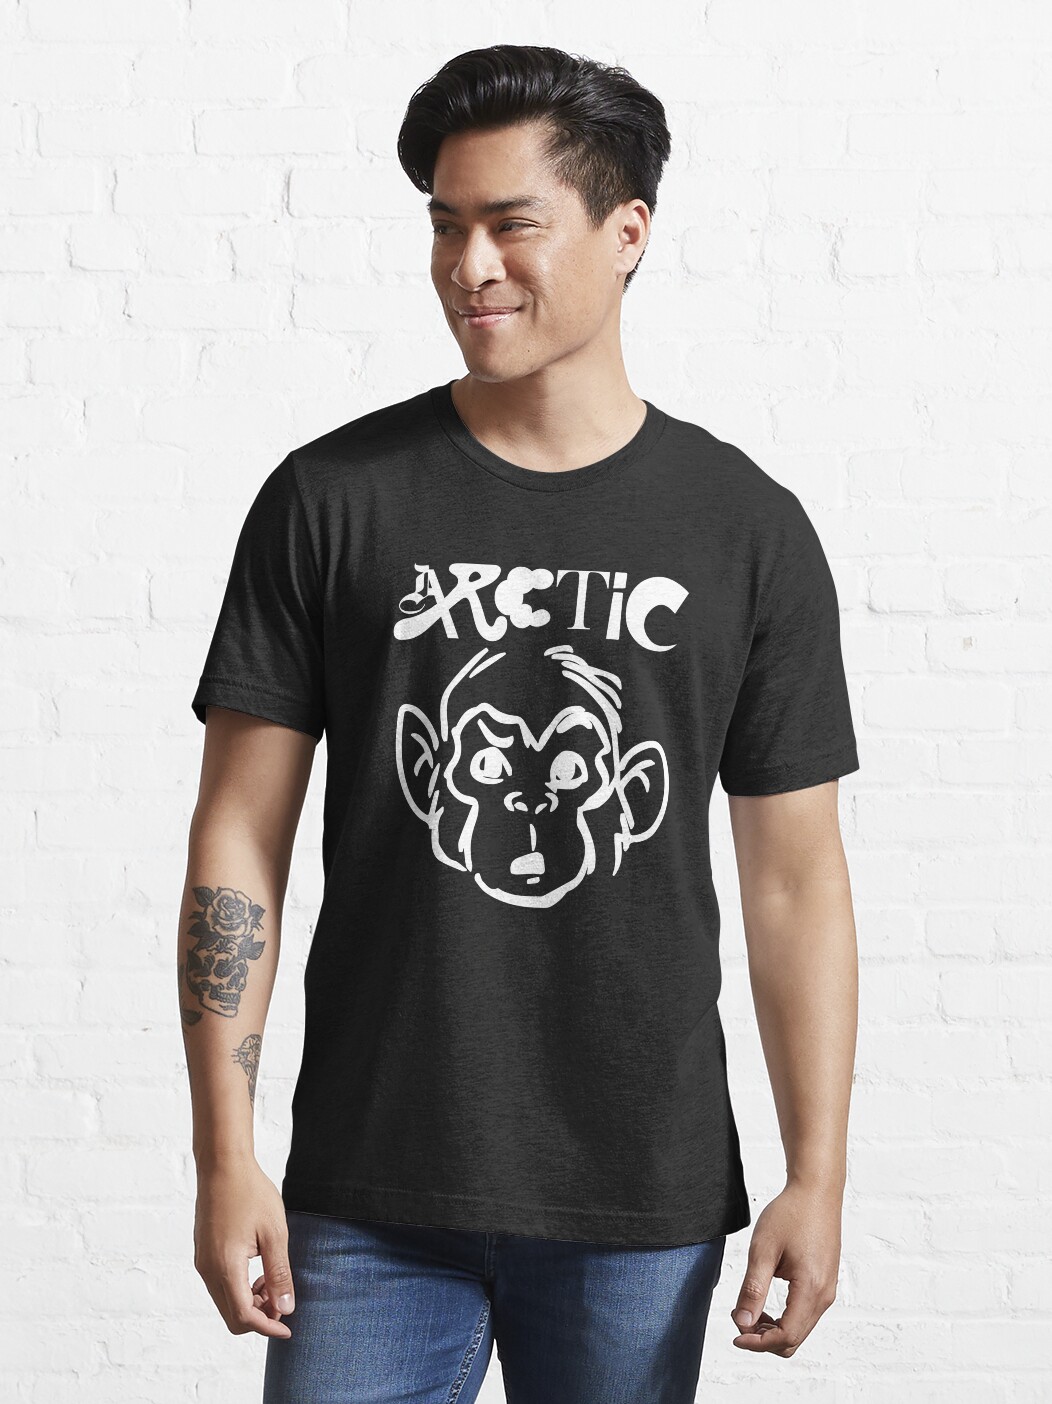 ssrcoslim fit t shirtmens10101001c5ca27c6fronttall three quarter2000x2000 4 - Arctic Monkeys Shop